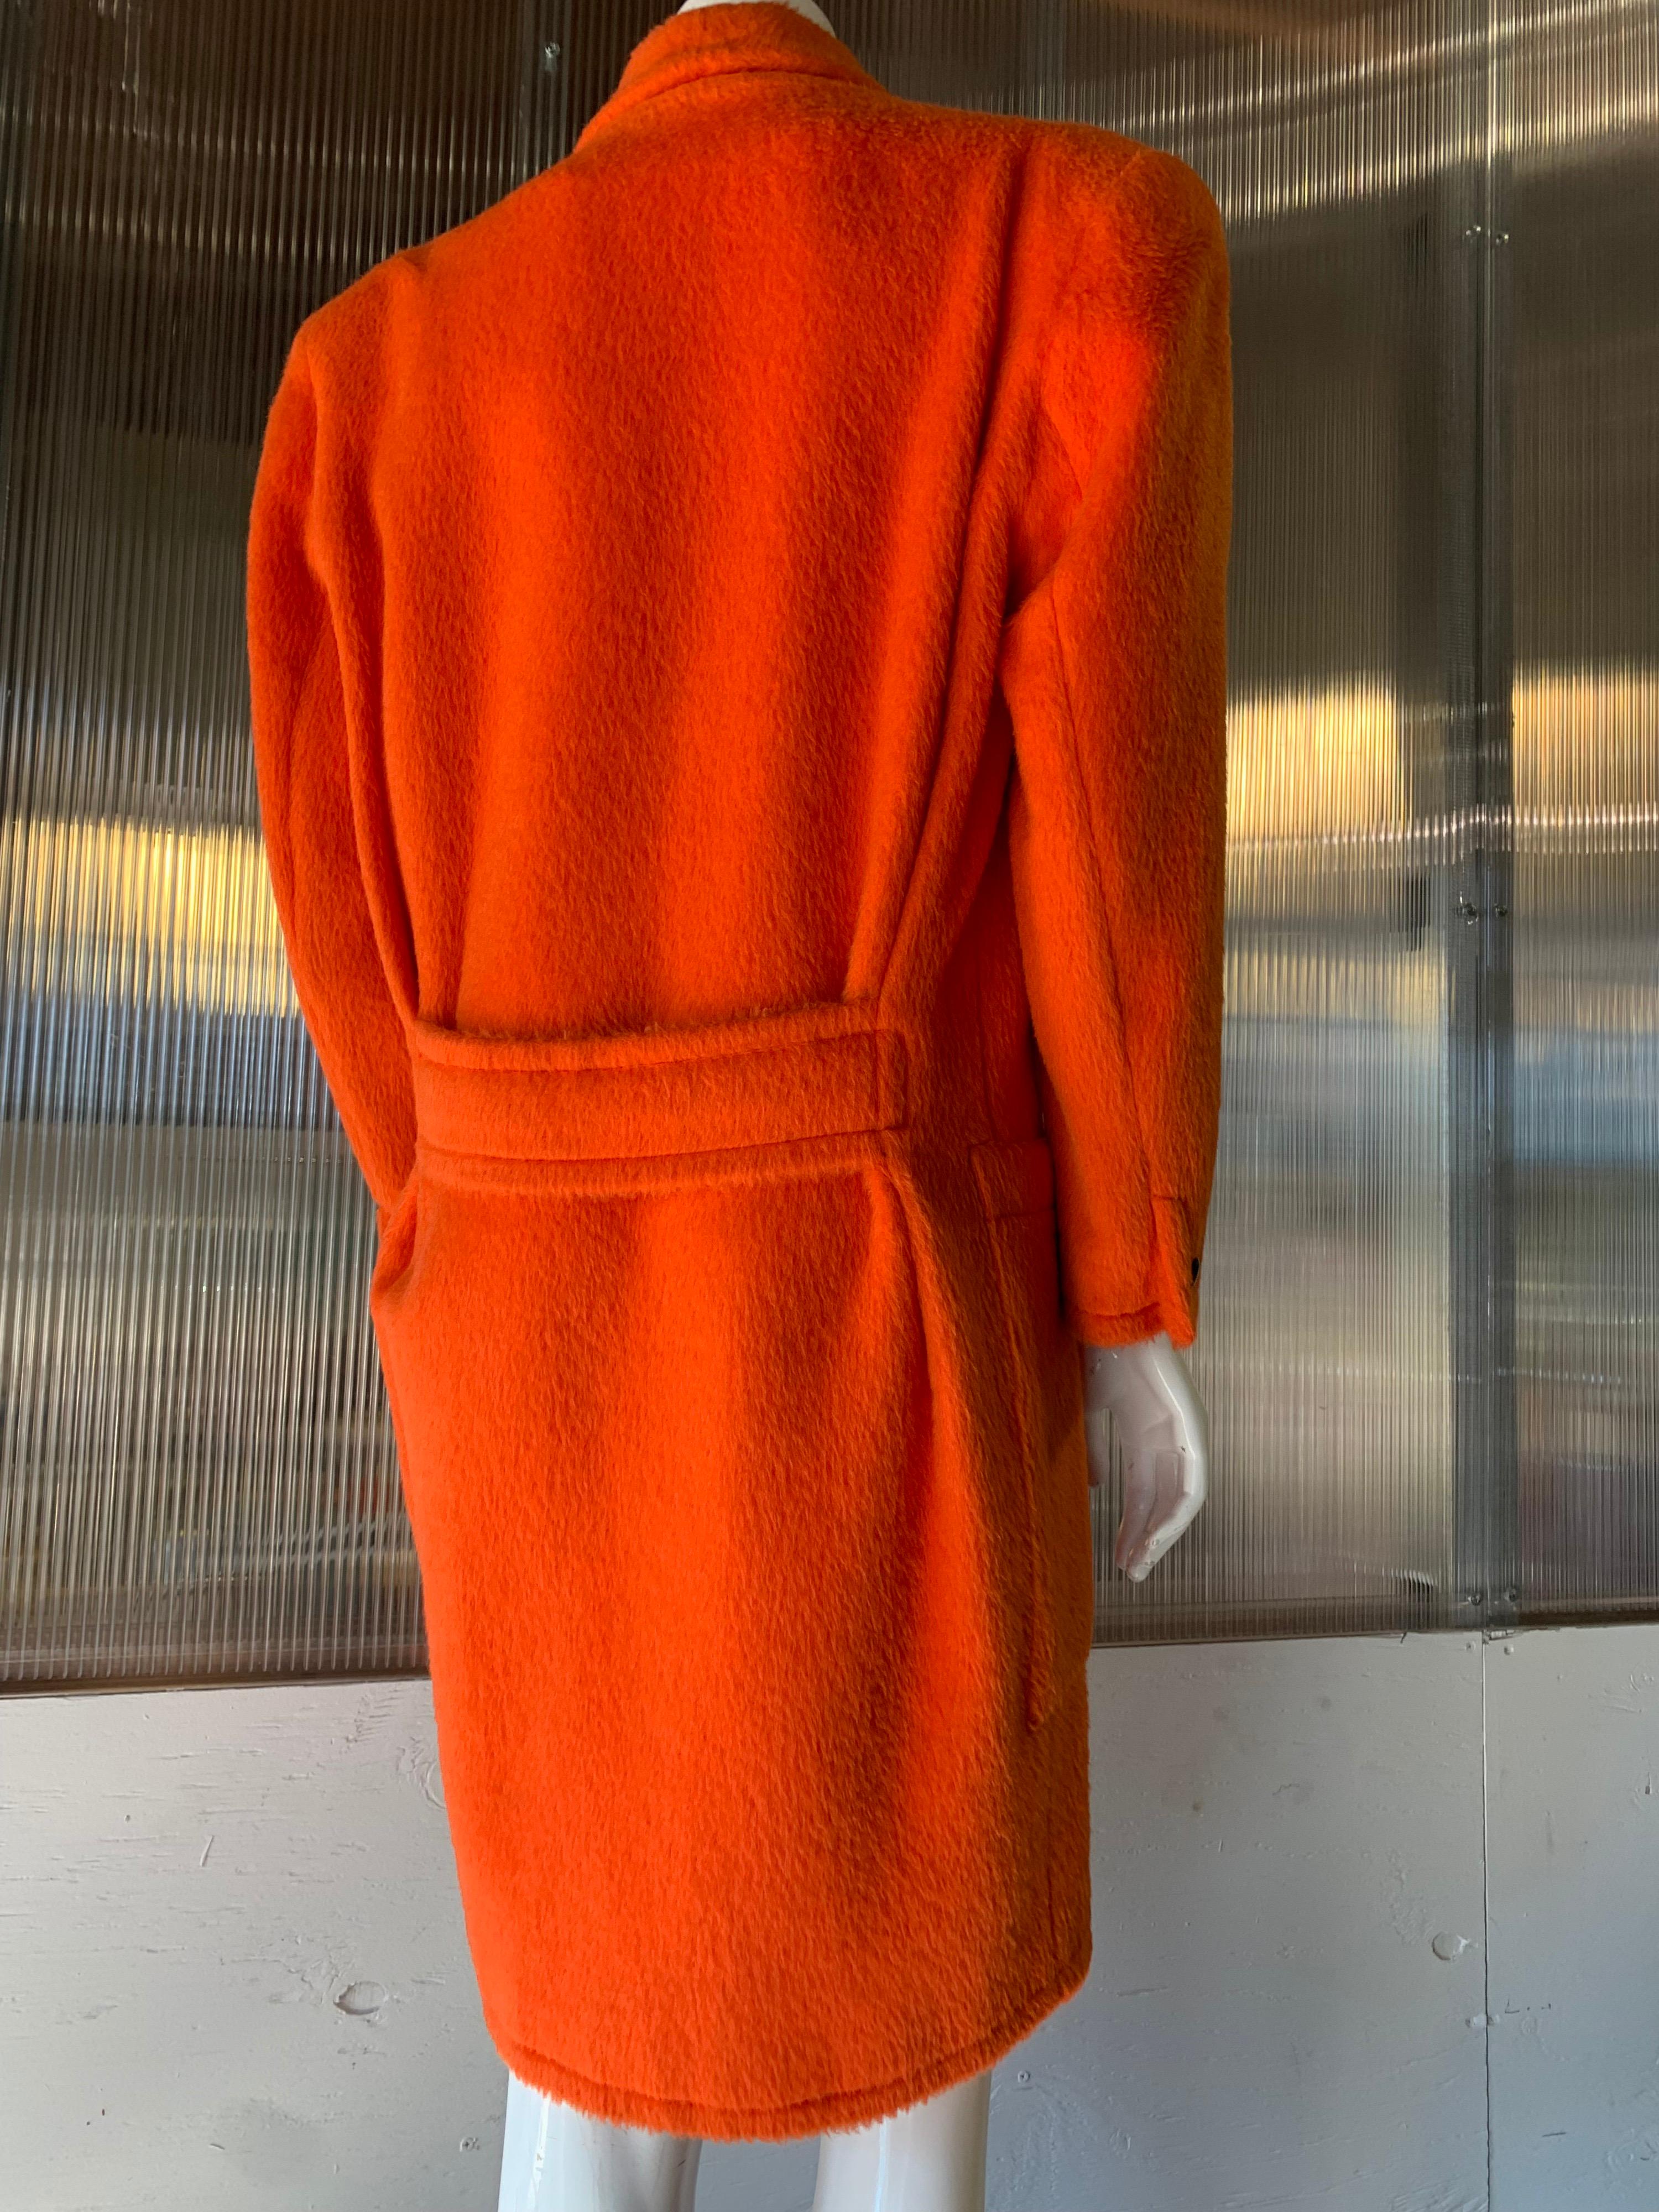 Women's 1980s Genny by Gianni Versace Vivid Orange Wool Overcoat W/ Strong Shoulders